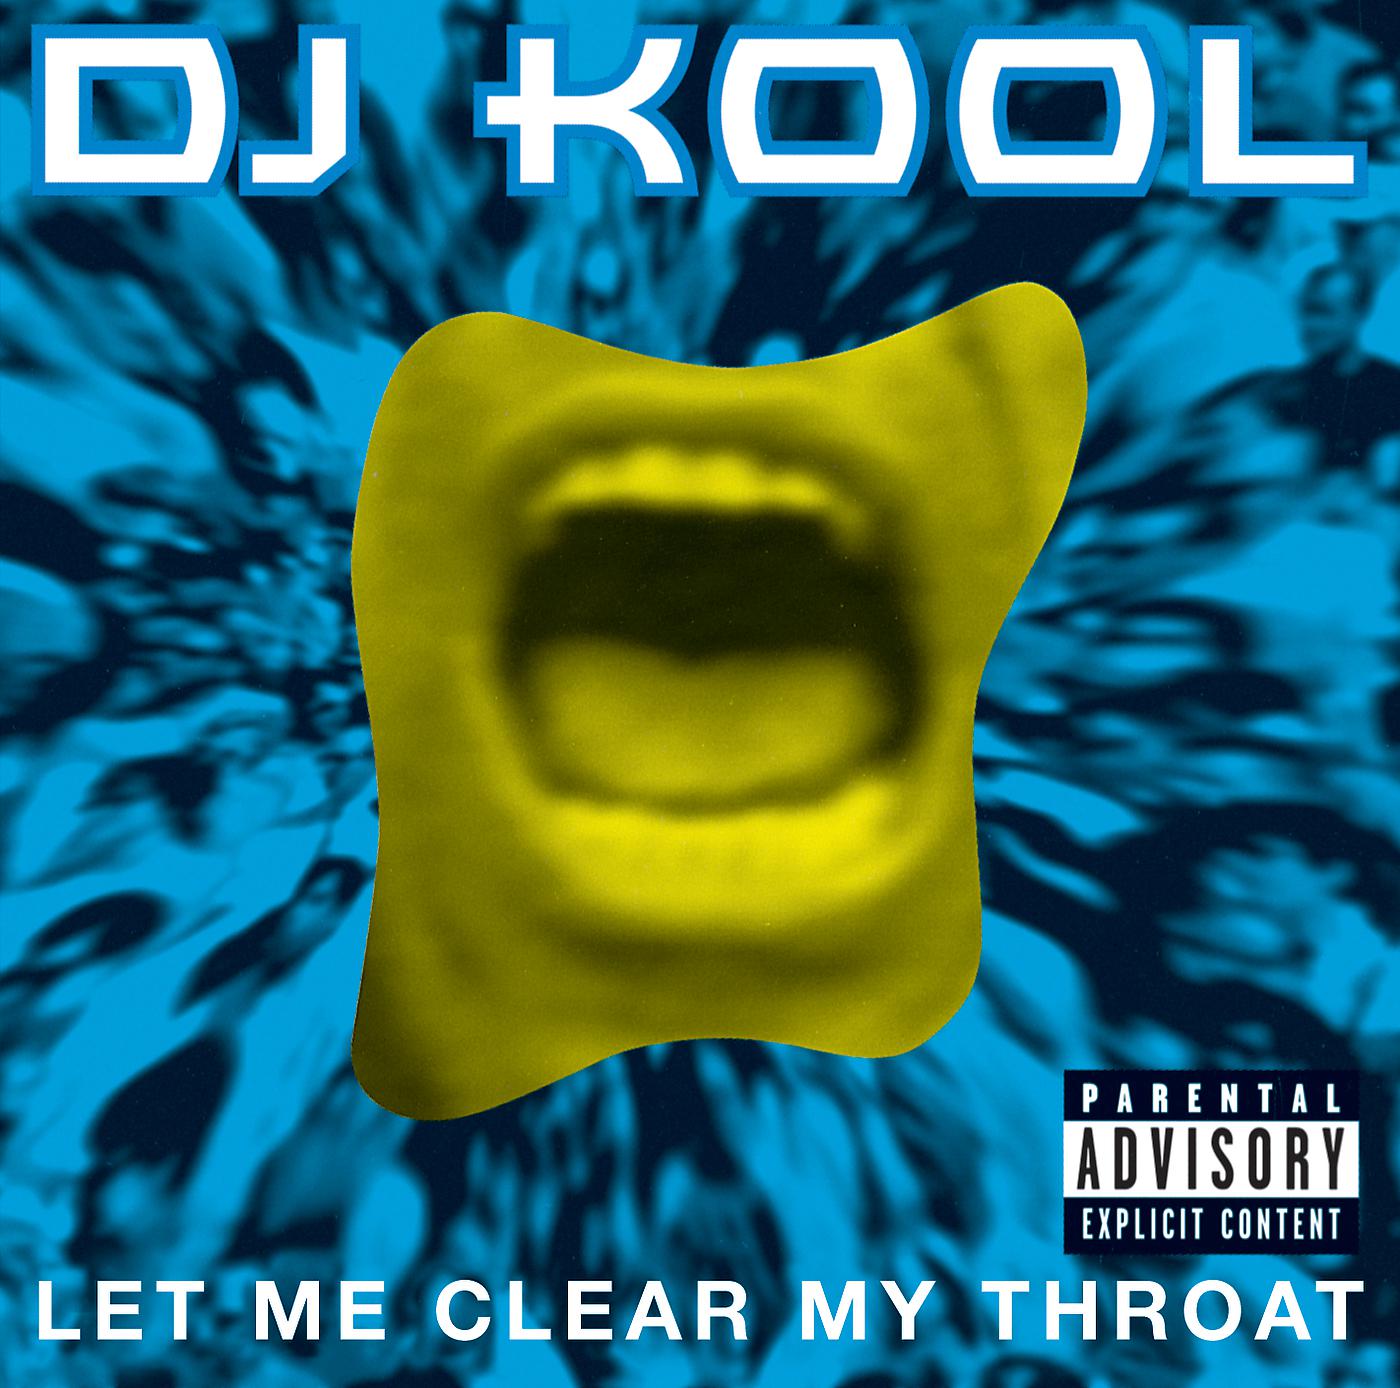 Clears throat. Let me Clear my throat Live DJ Kool. DJ Kool Kid - “follow the leader” pt. 3 (2003). Let me Clear the Air.